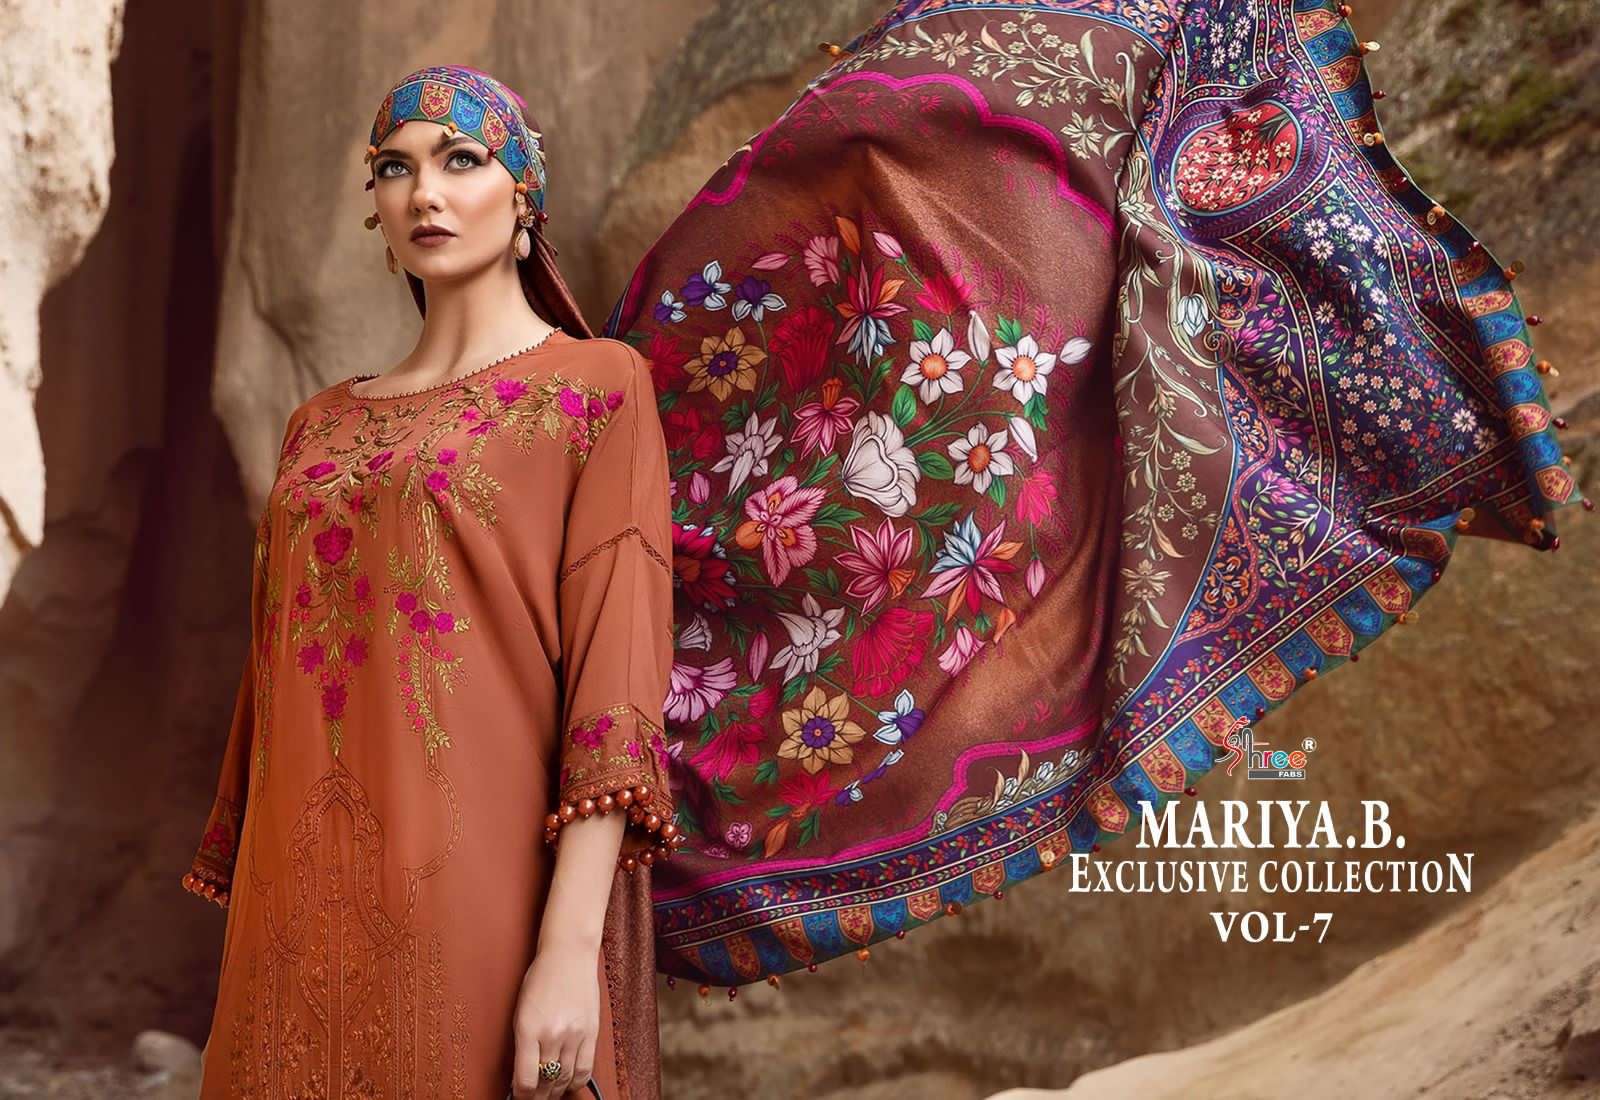 shree fabs maria b exclusive collection vol-7 3356-3600 series latest pakistani wedding wear cotton dupatta salwar kameez wholesaler surat gujarat